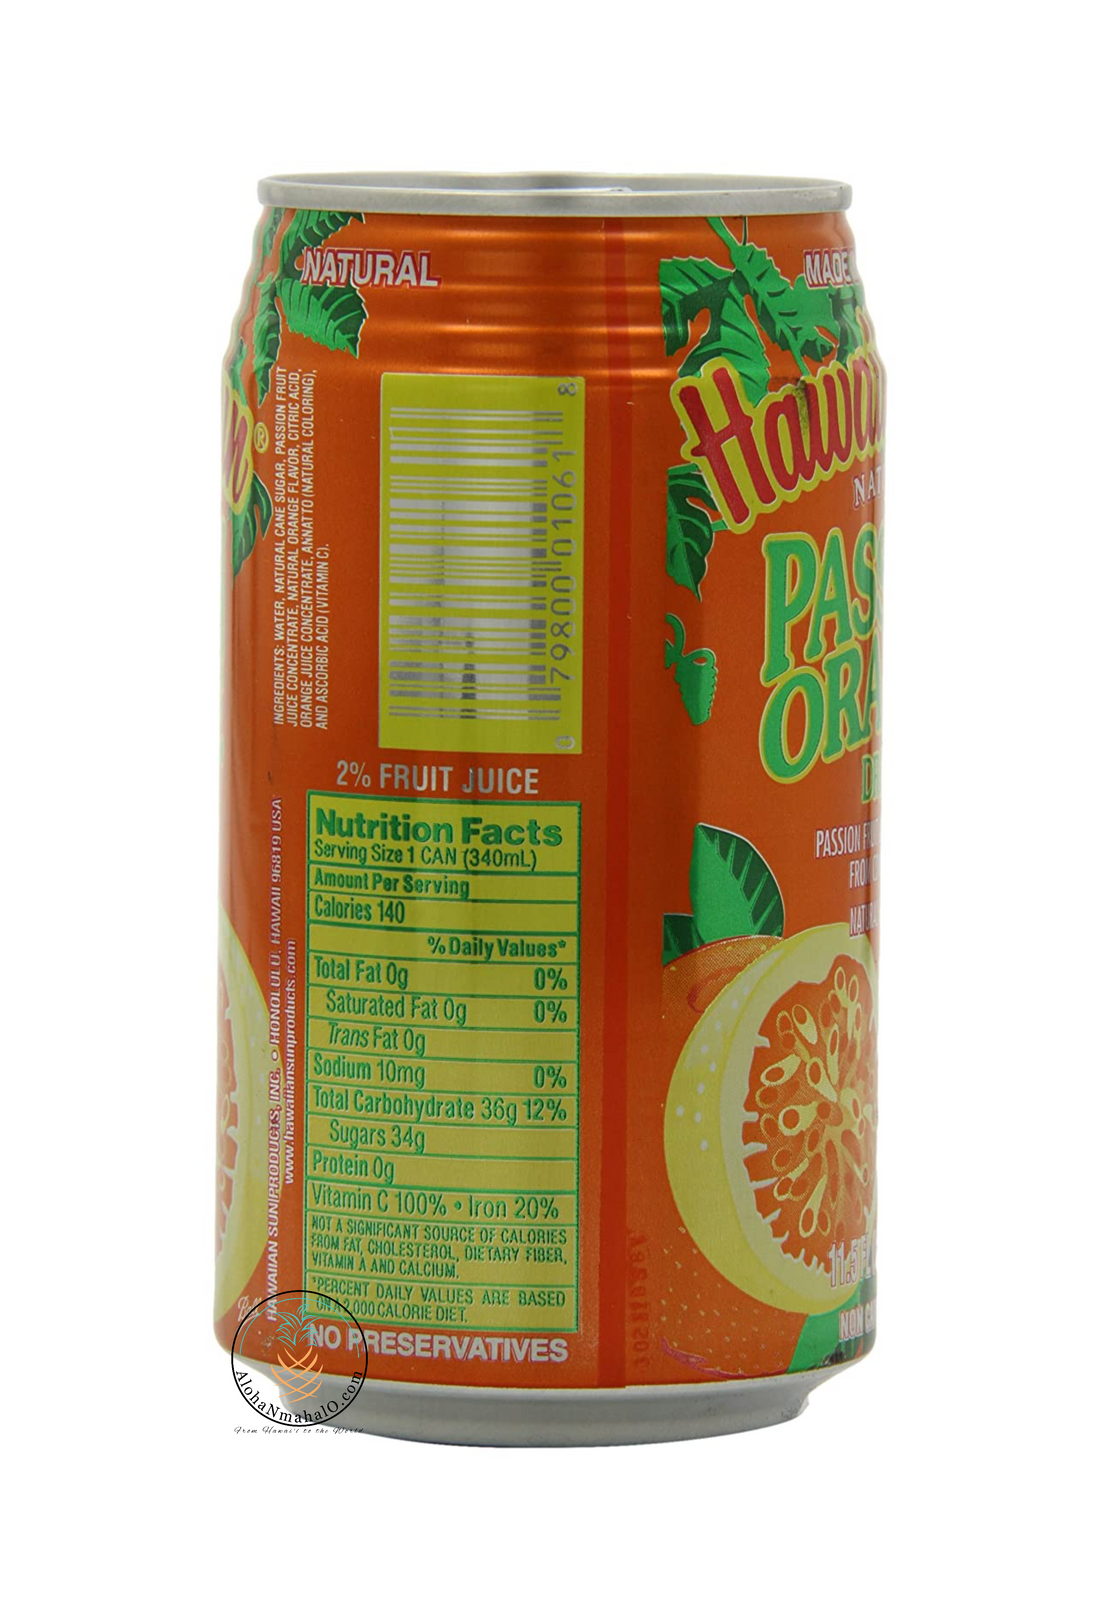 Hawaiian Sun Passion Orange case of 12 11.5oz cans